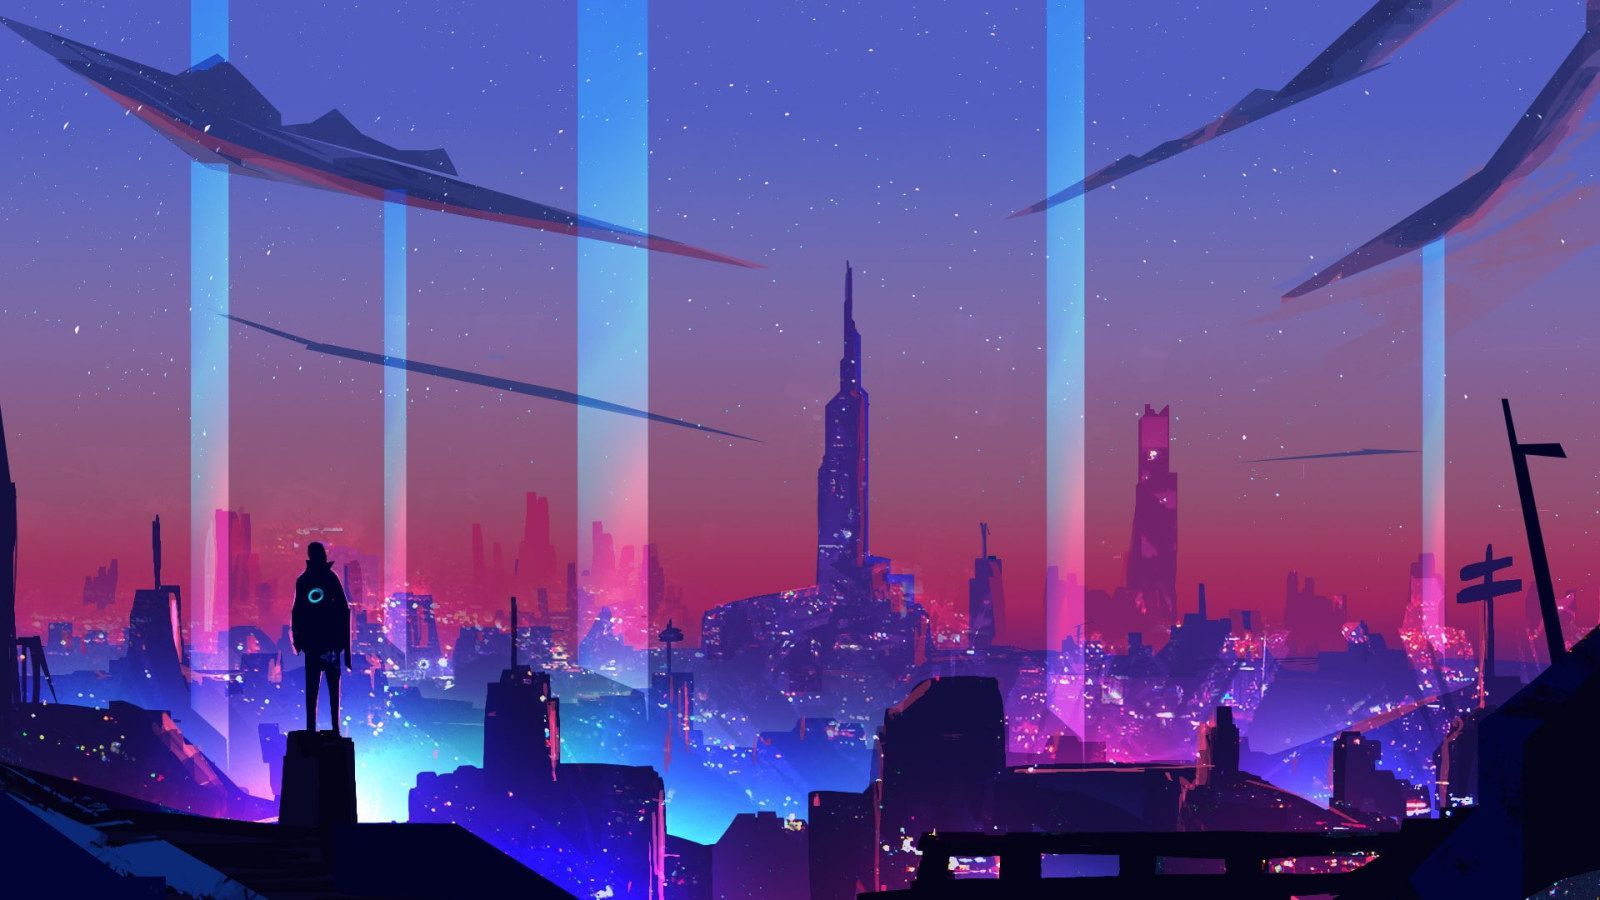 A digital painting of a cyberpunk city at night - Cyberpunk